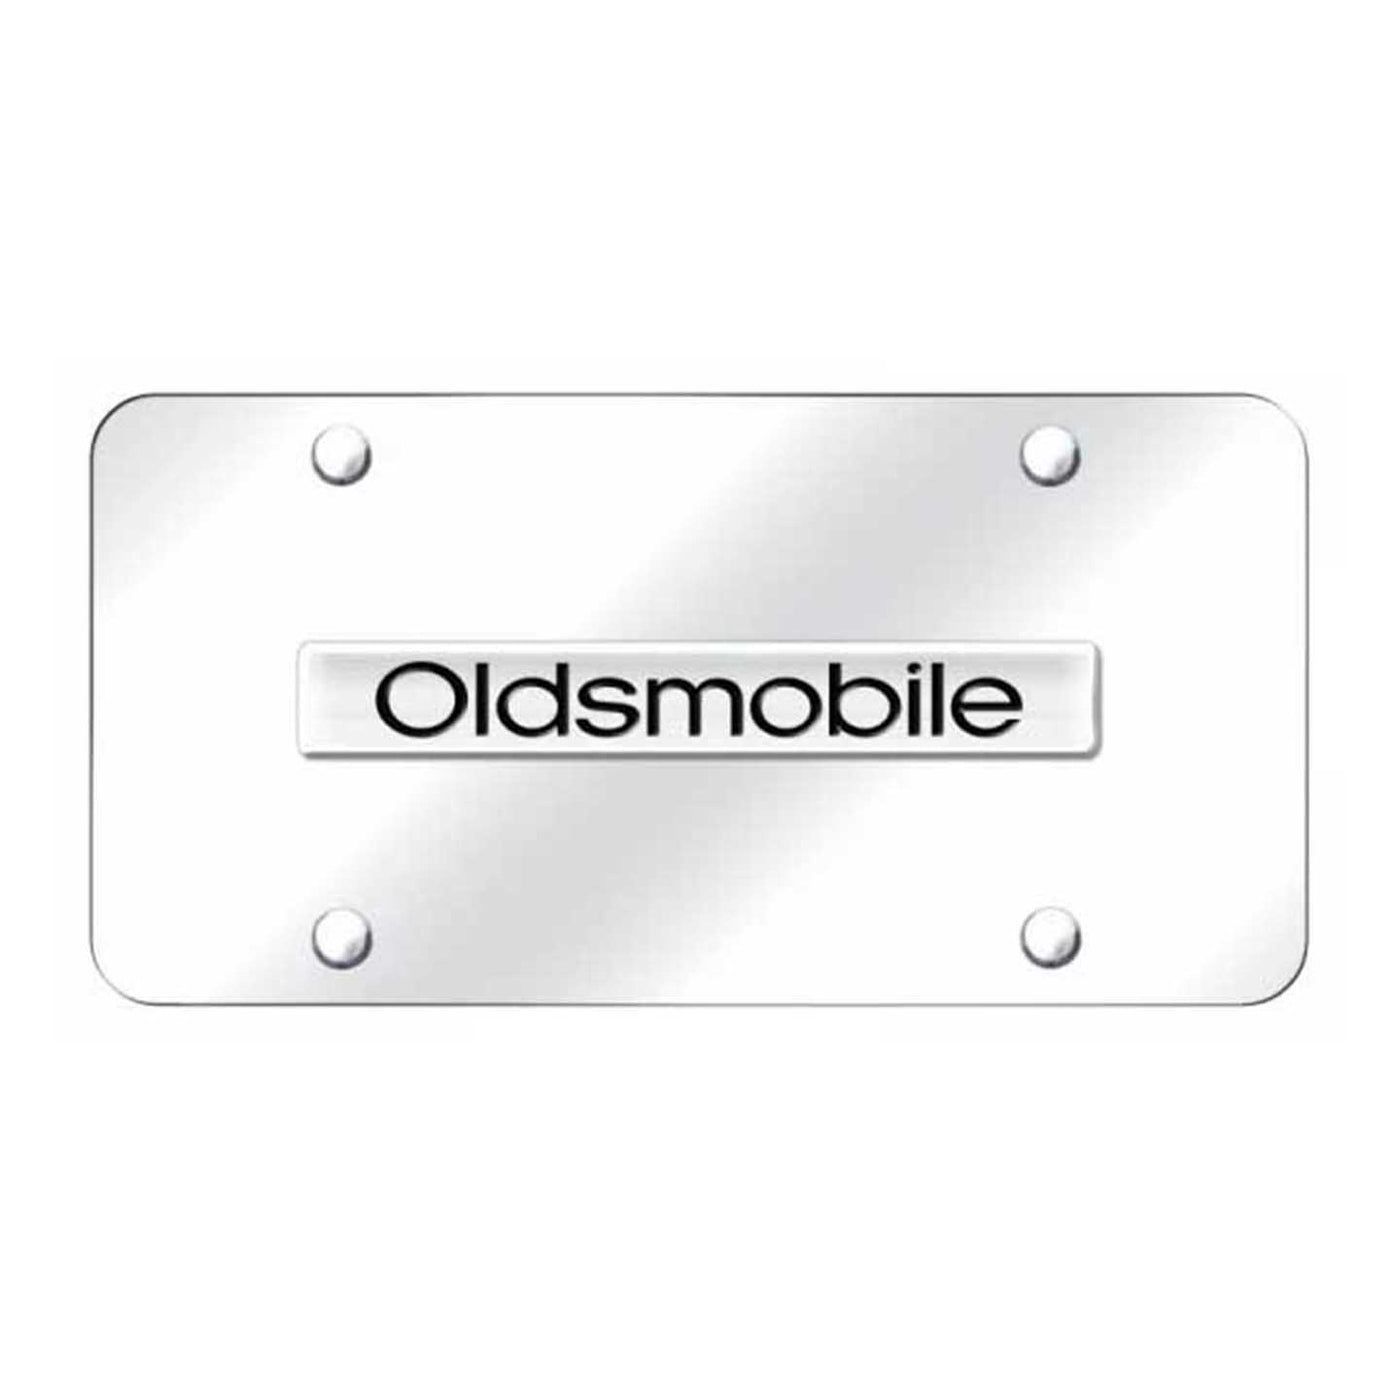 Oldsmobile Name License Plate - Chrome on Mirrored